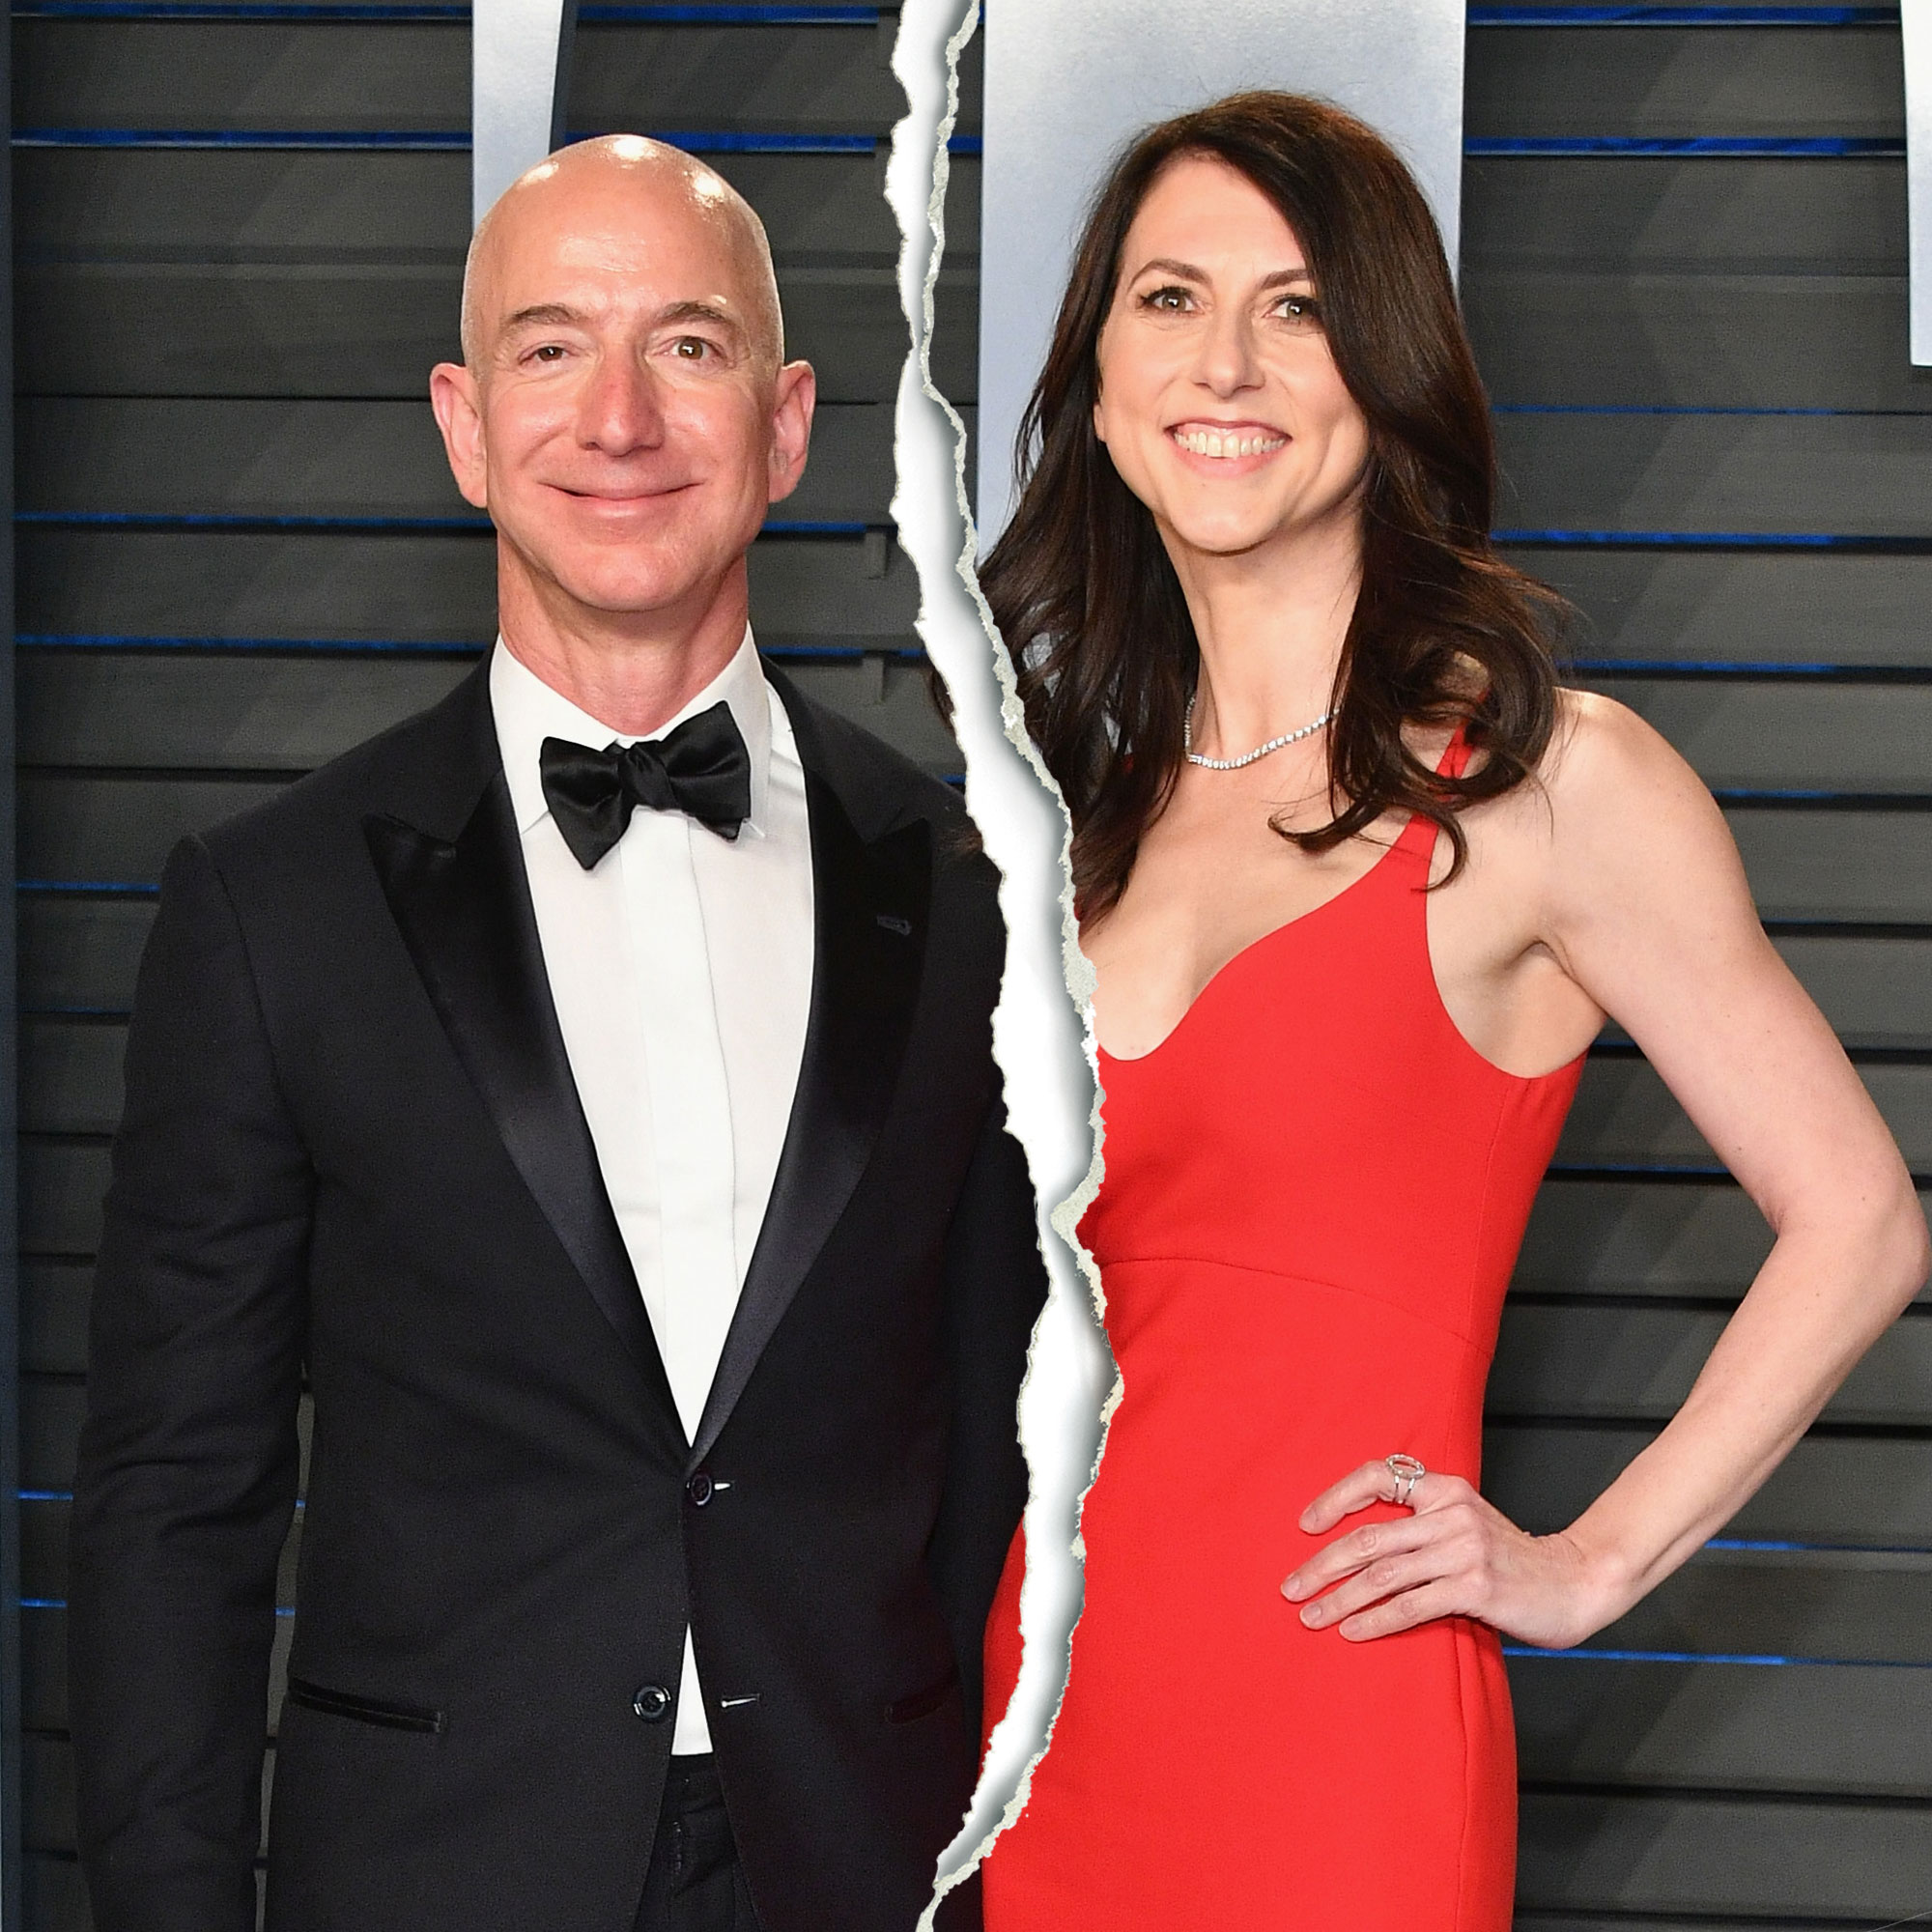 Jeff Bezos Divorce Details - Jeff Bezos and His Wife MacKenzie Are